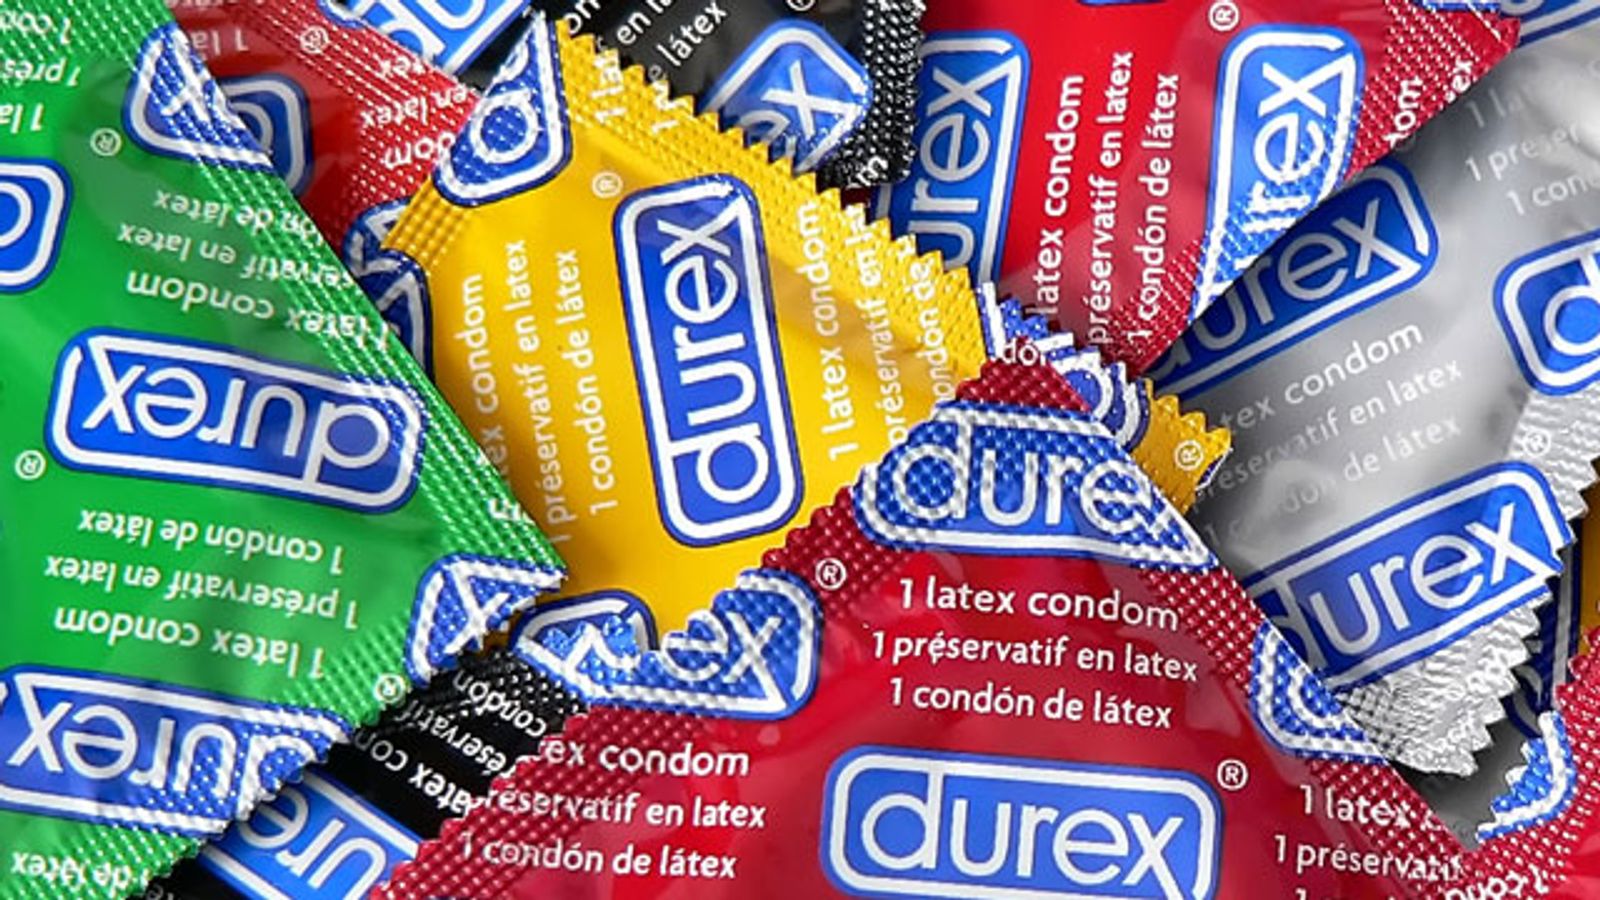 UK Supermarkets Get Extra Large Condoms